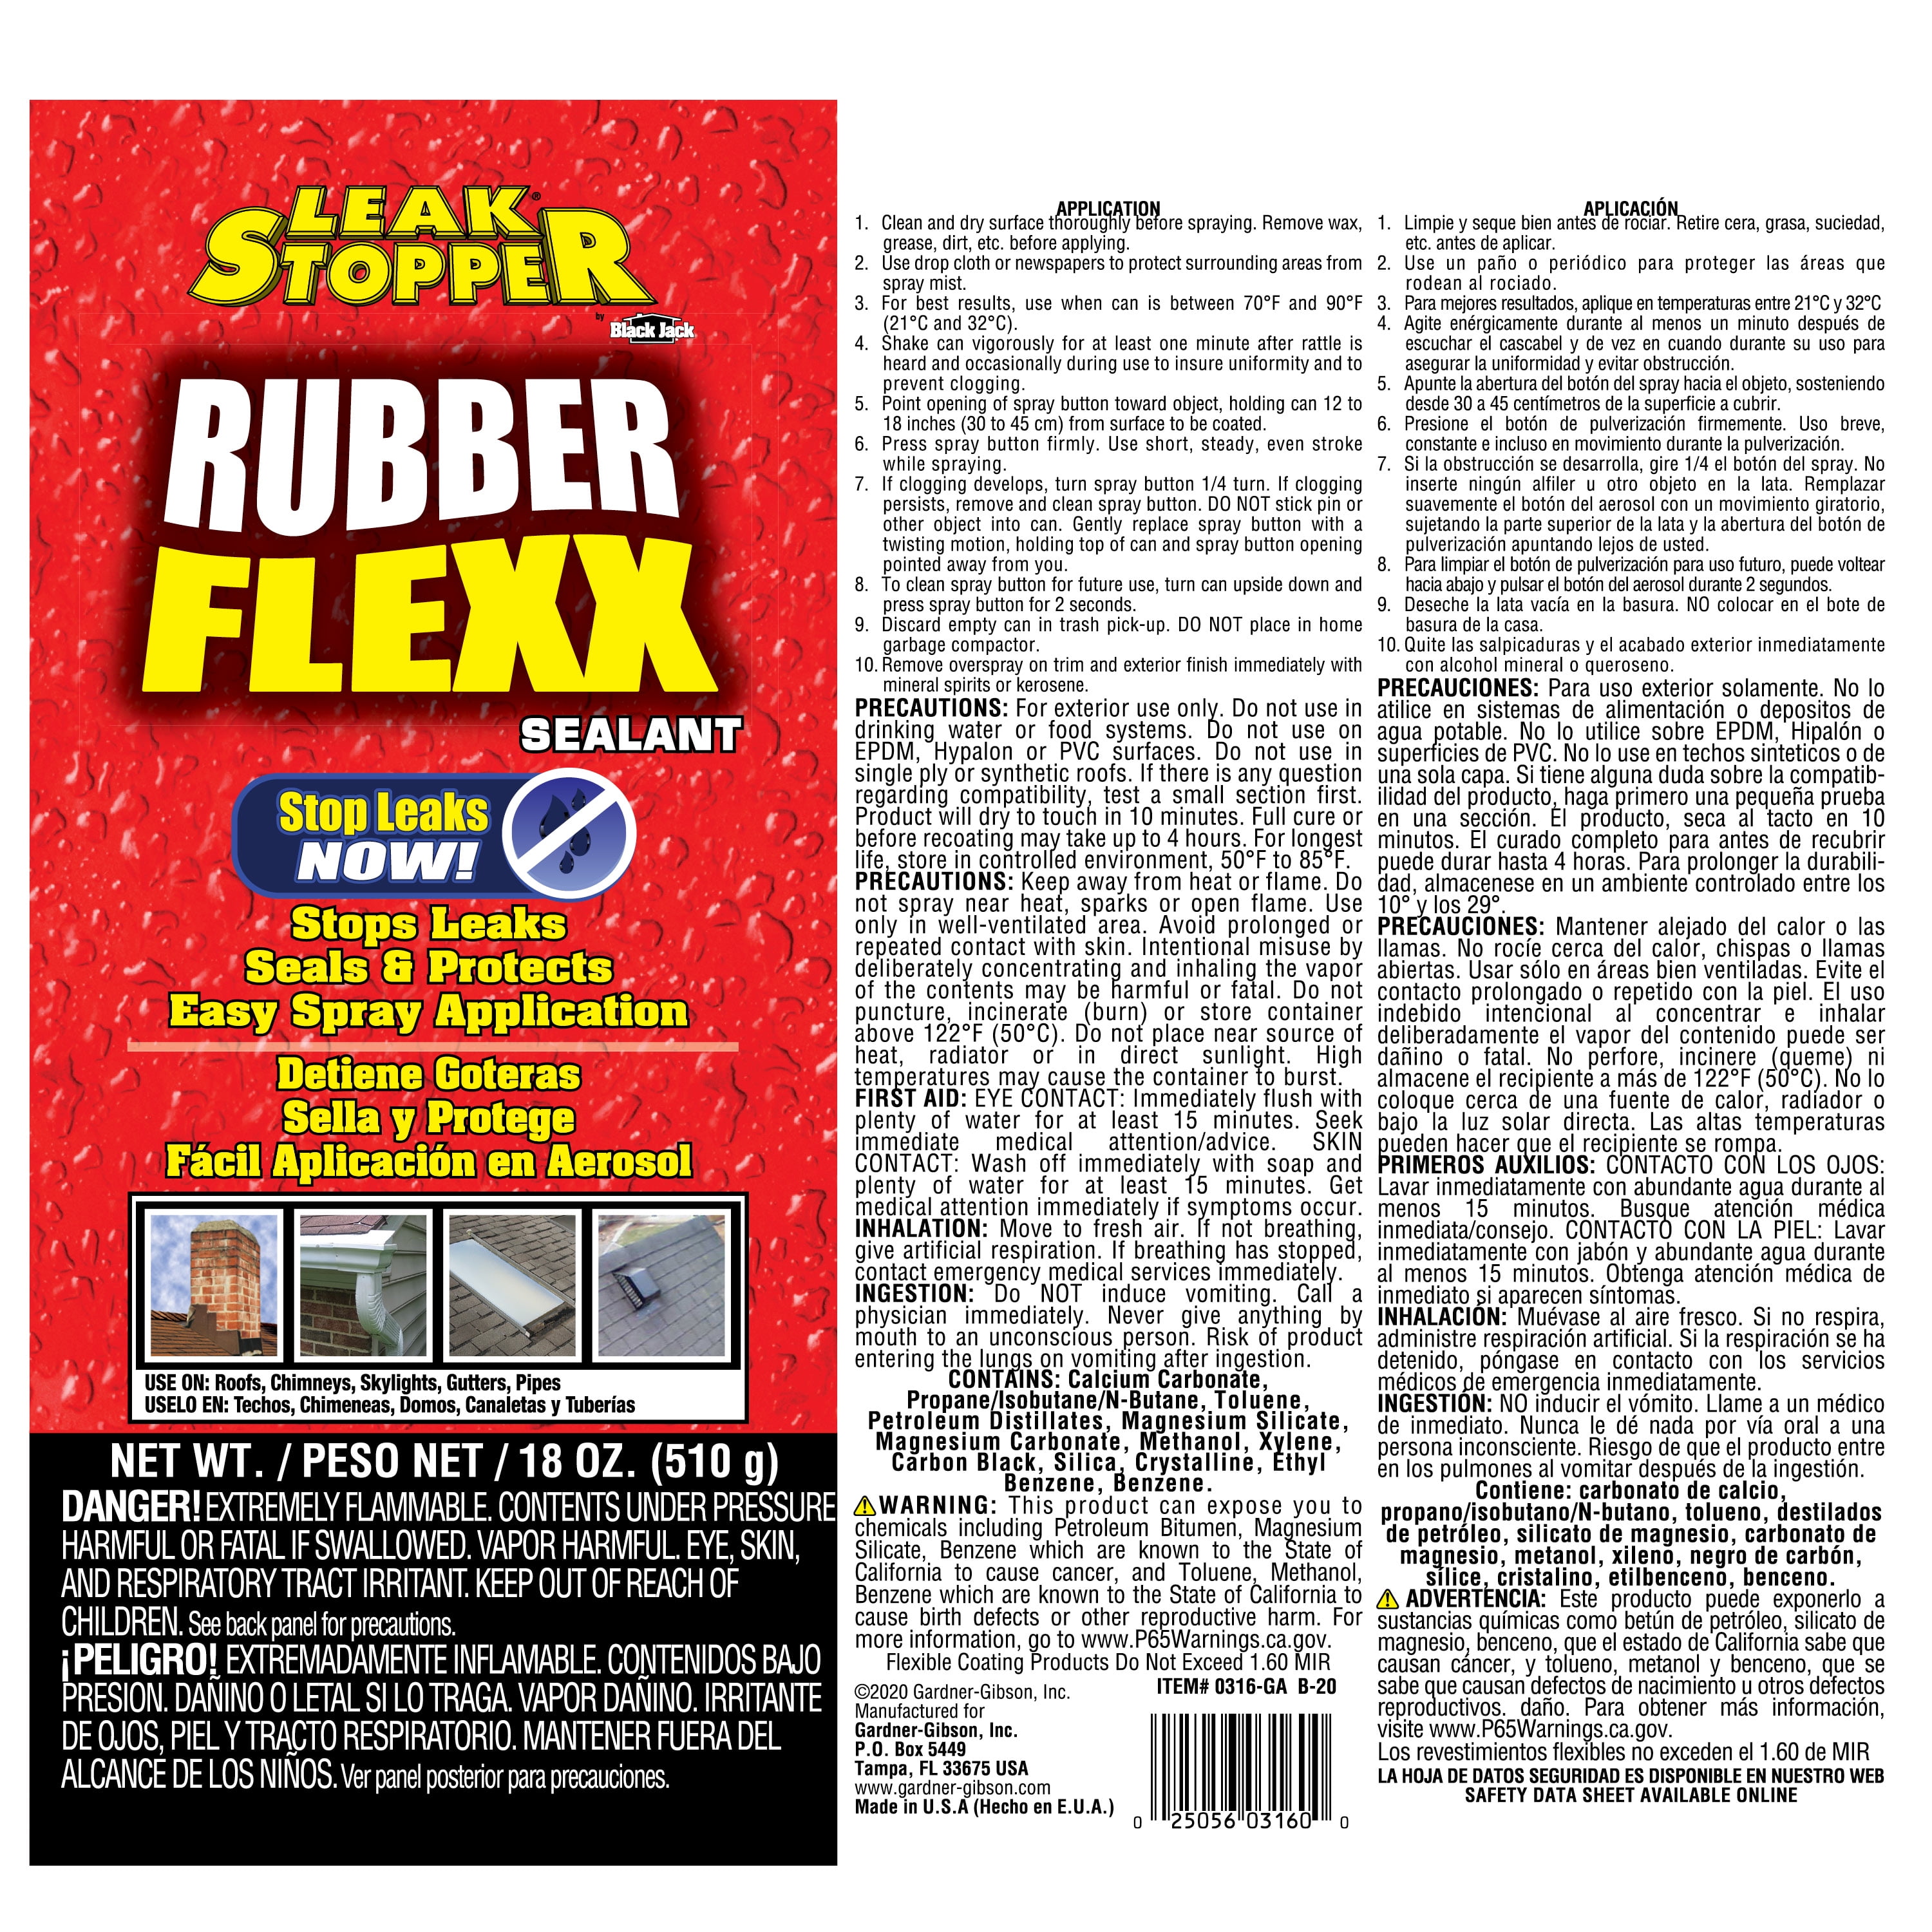 Leak Stopper® Rubber Flexx Liquid Rubber Coating (Clear) – Black Jack  Coatings